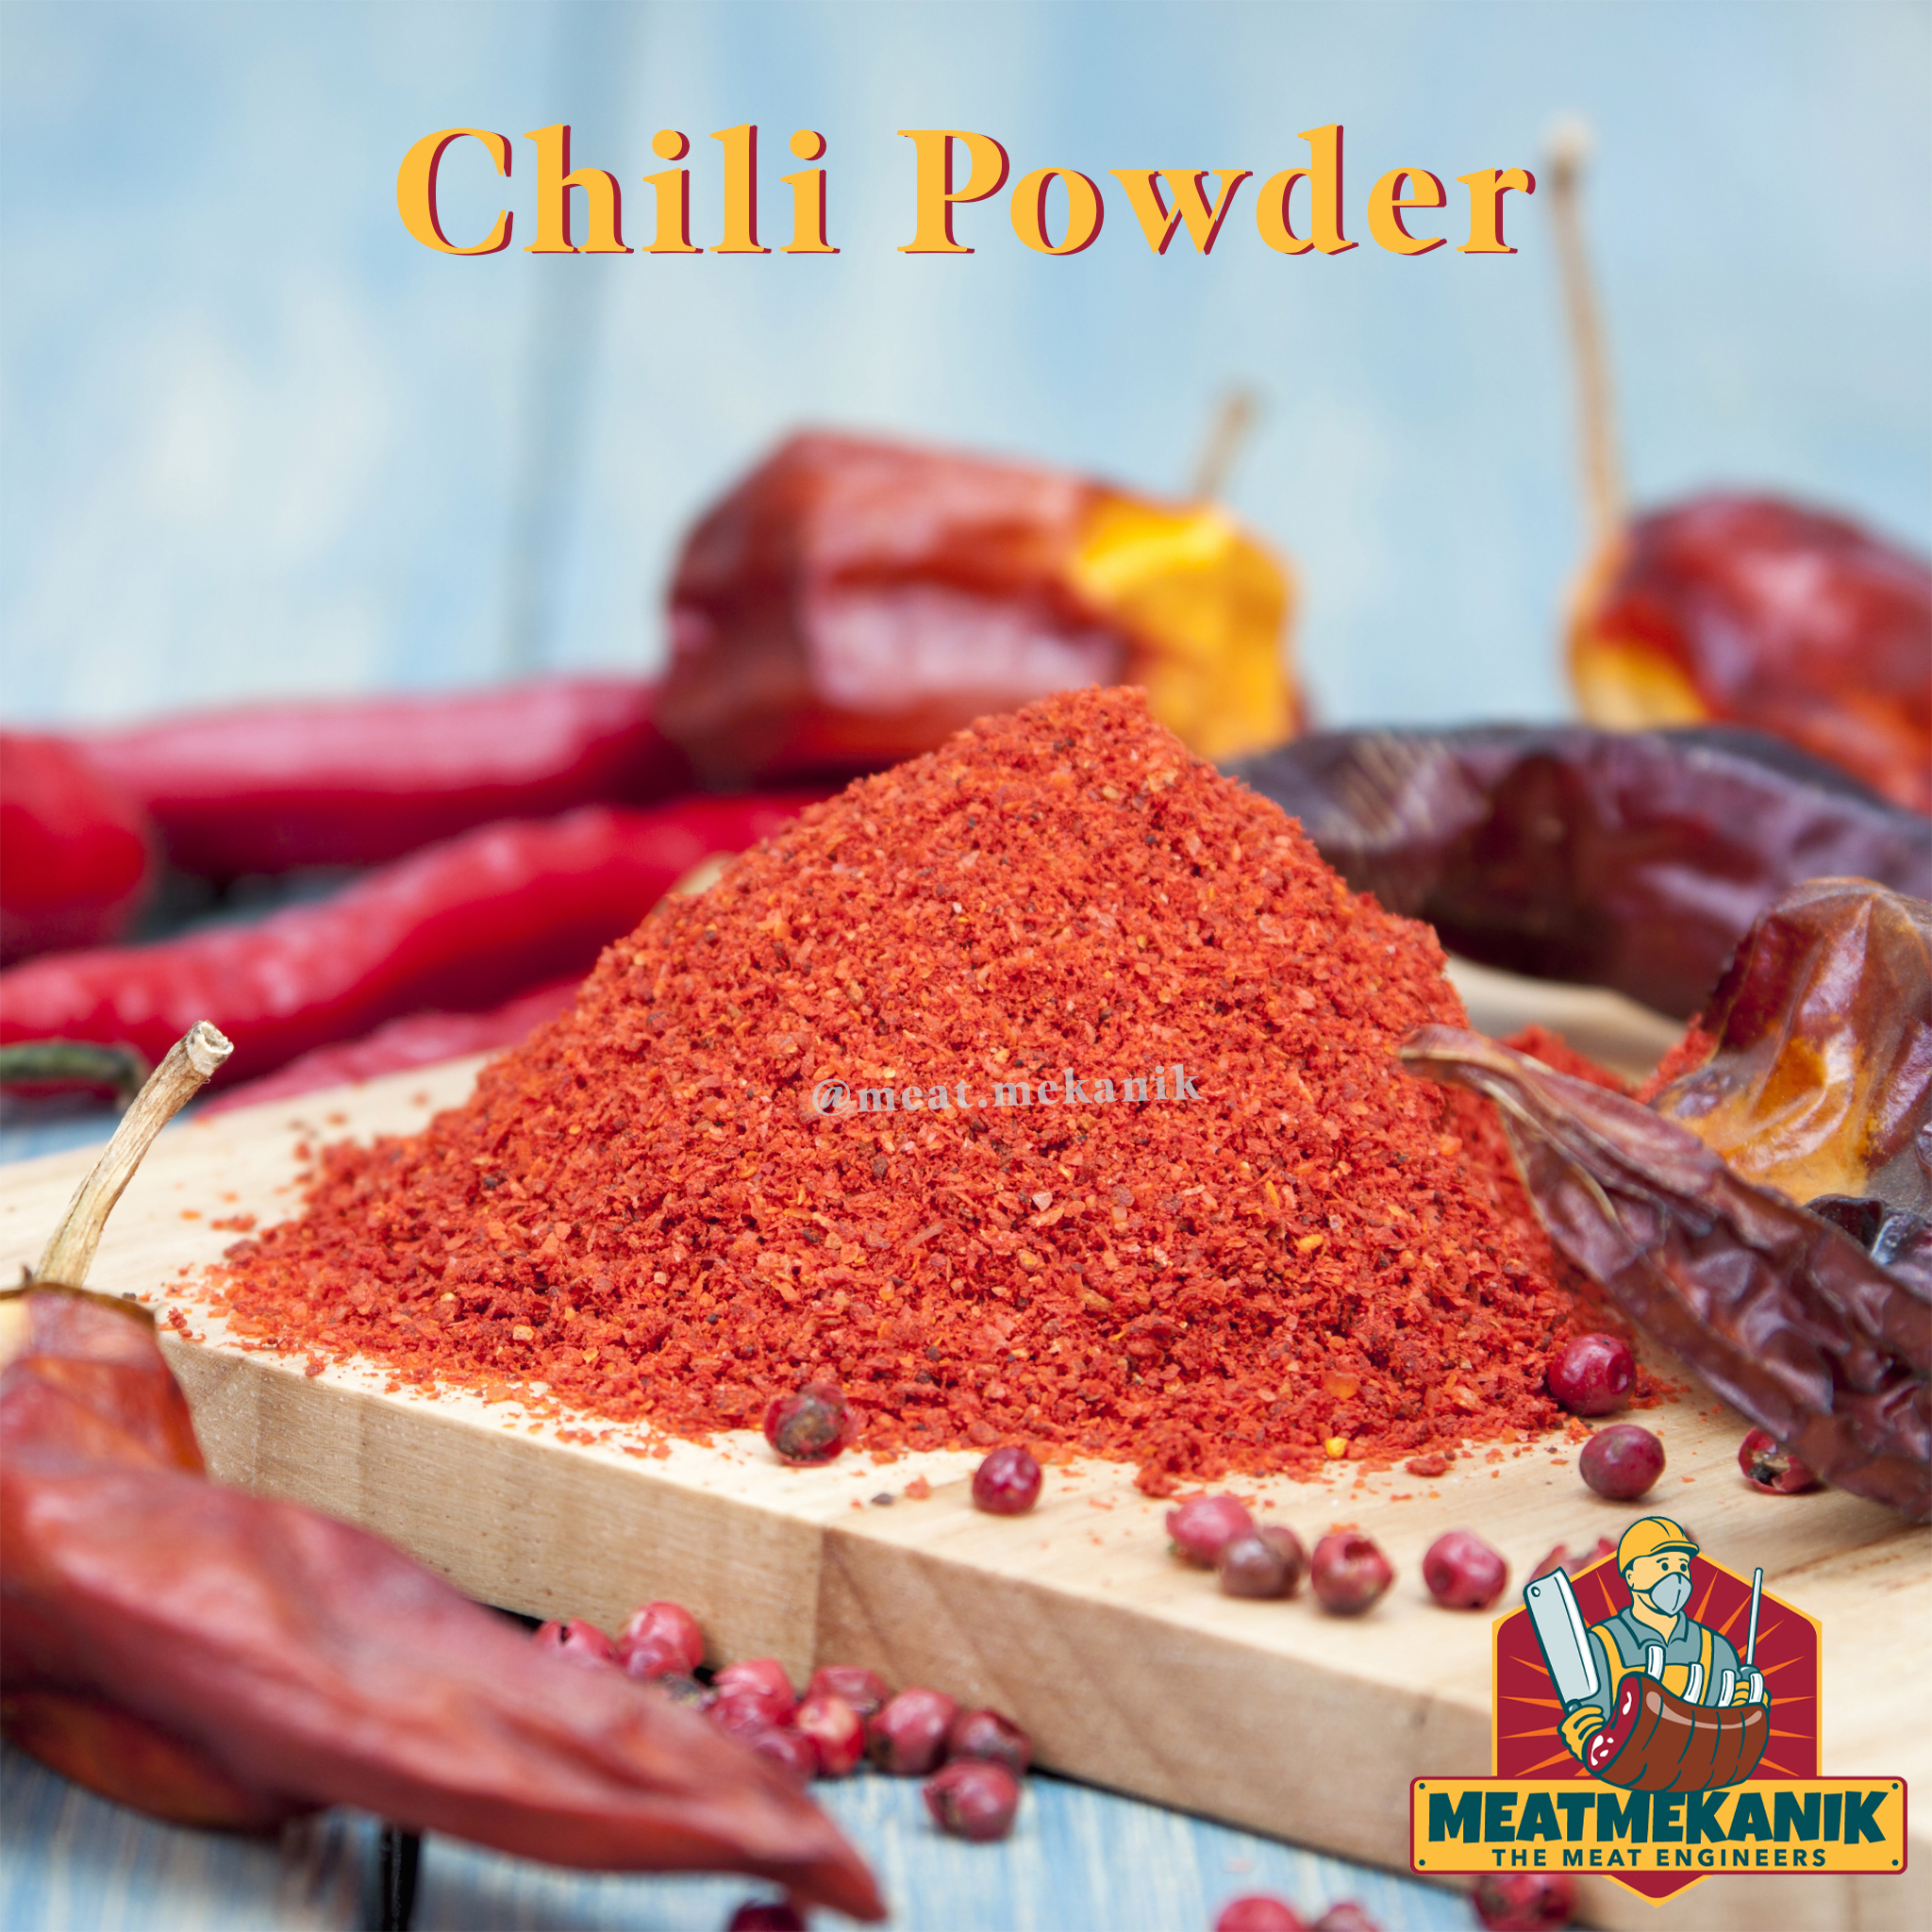 Chili Powder - Meat Mekanik